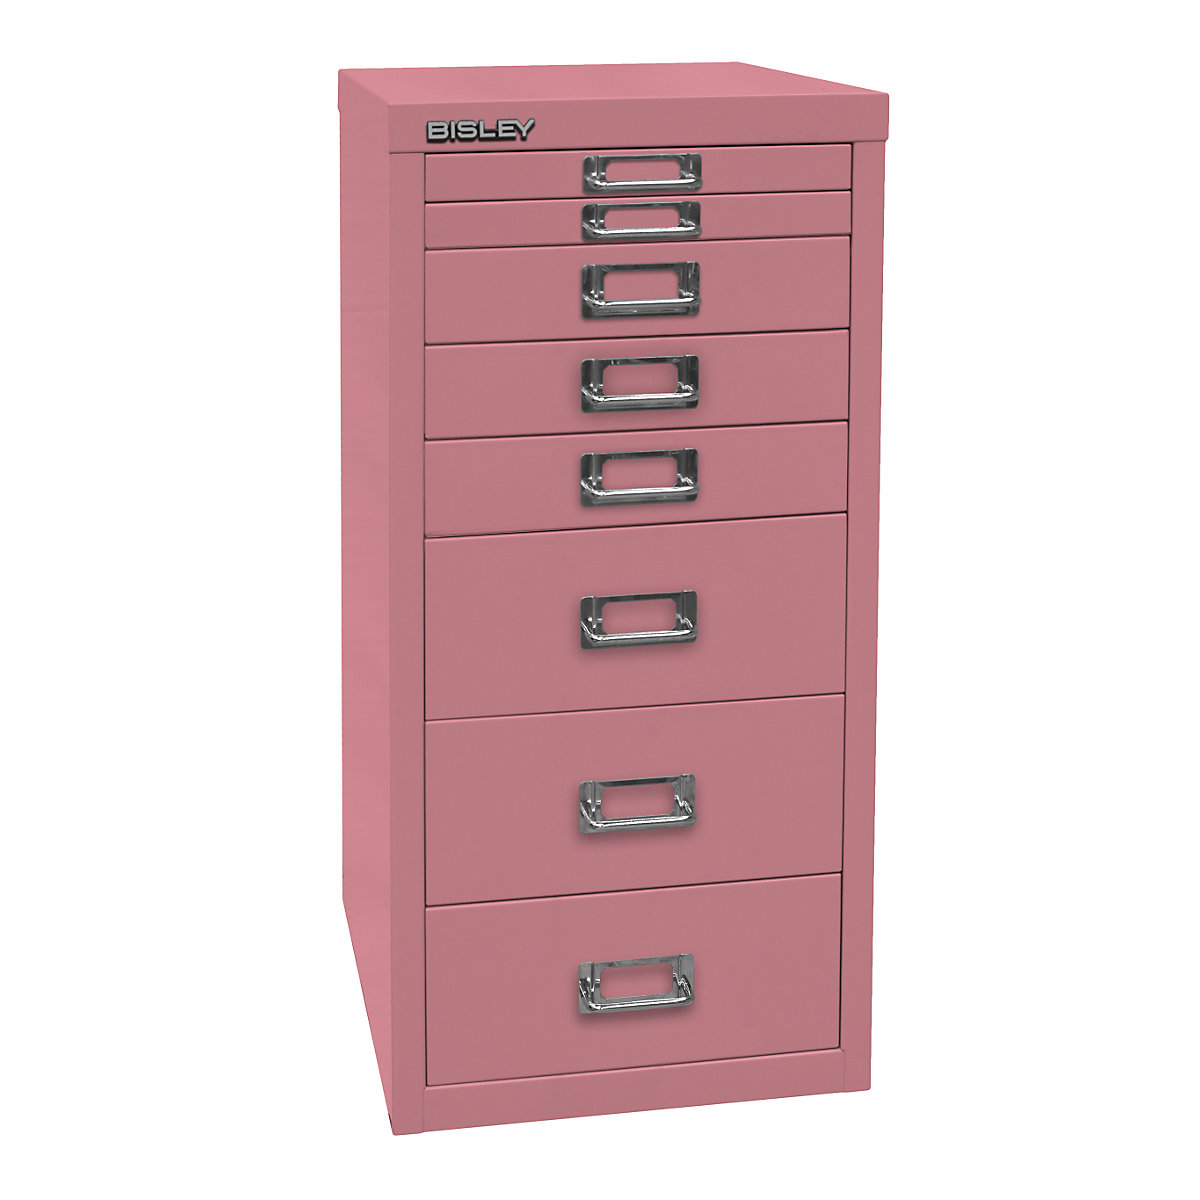 MultiDrawer™ 29 series – BISLEY, A4, 8 drawers, pink-6